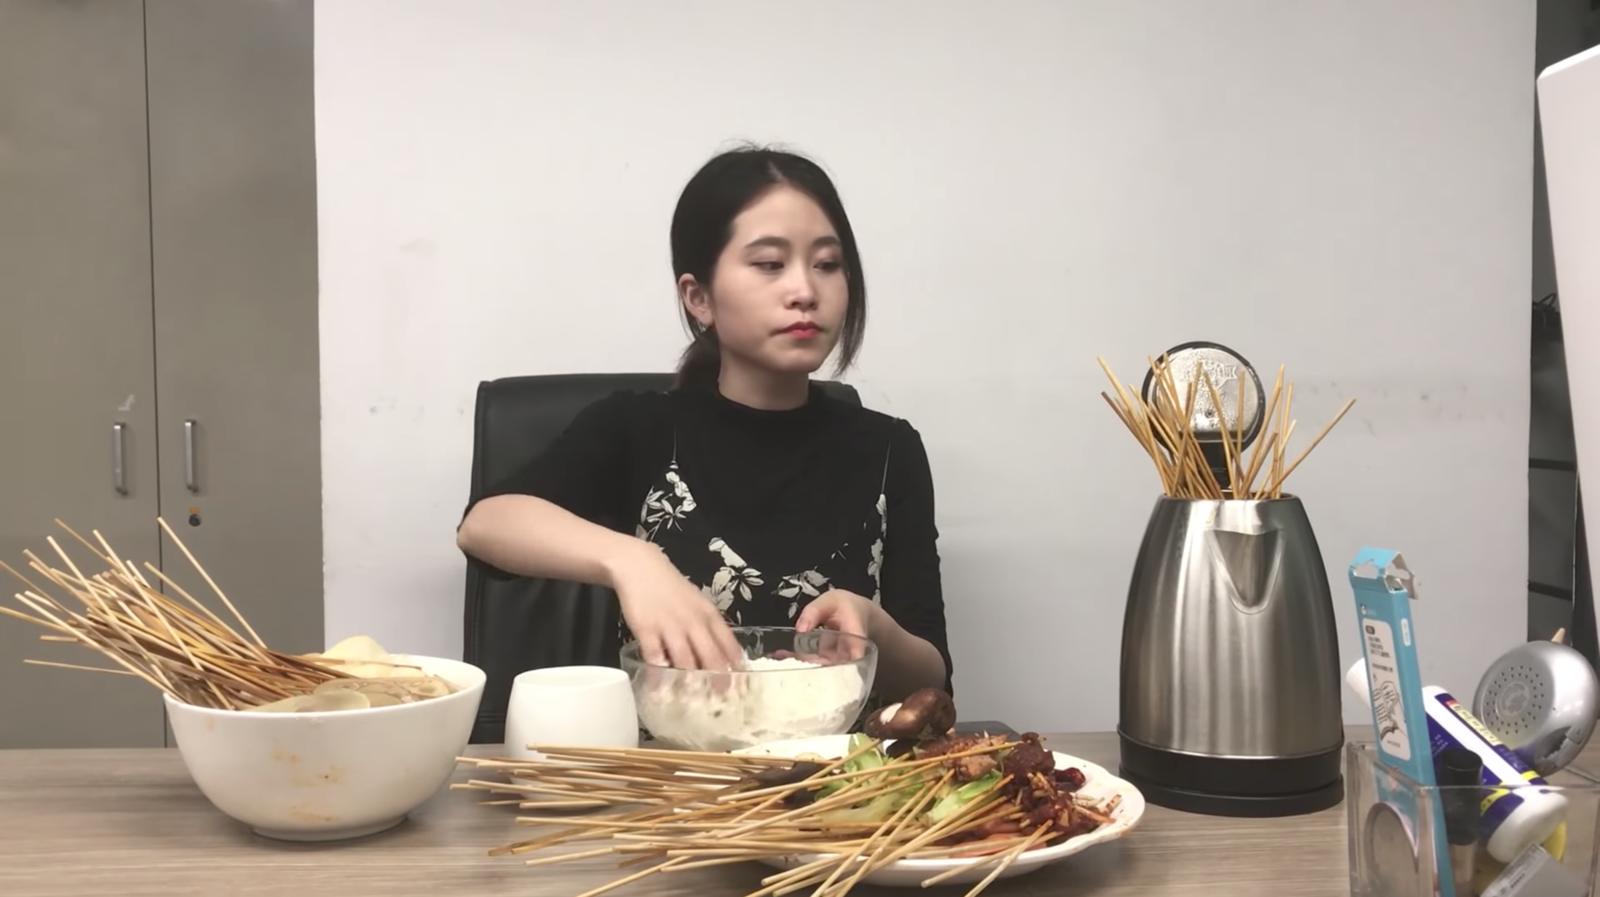 She the dishes already. Китаянка готовит. Китайская девушка готовит еду. Китаянка на кухне. Девушка китаянка готовит.